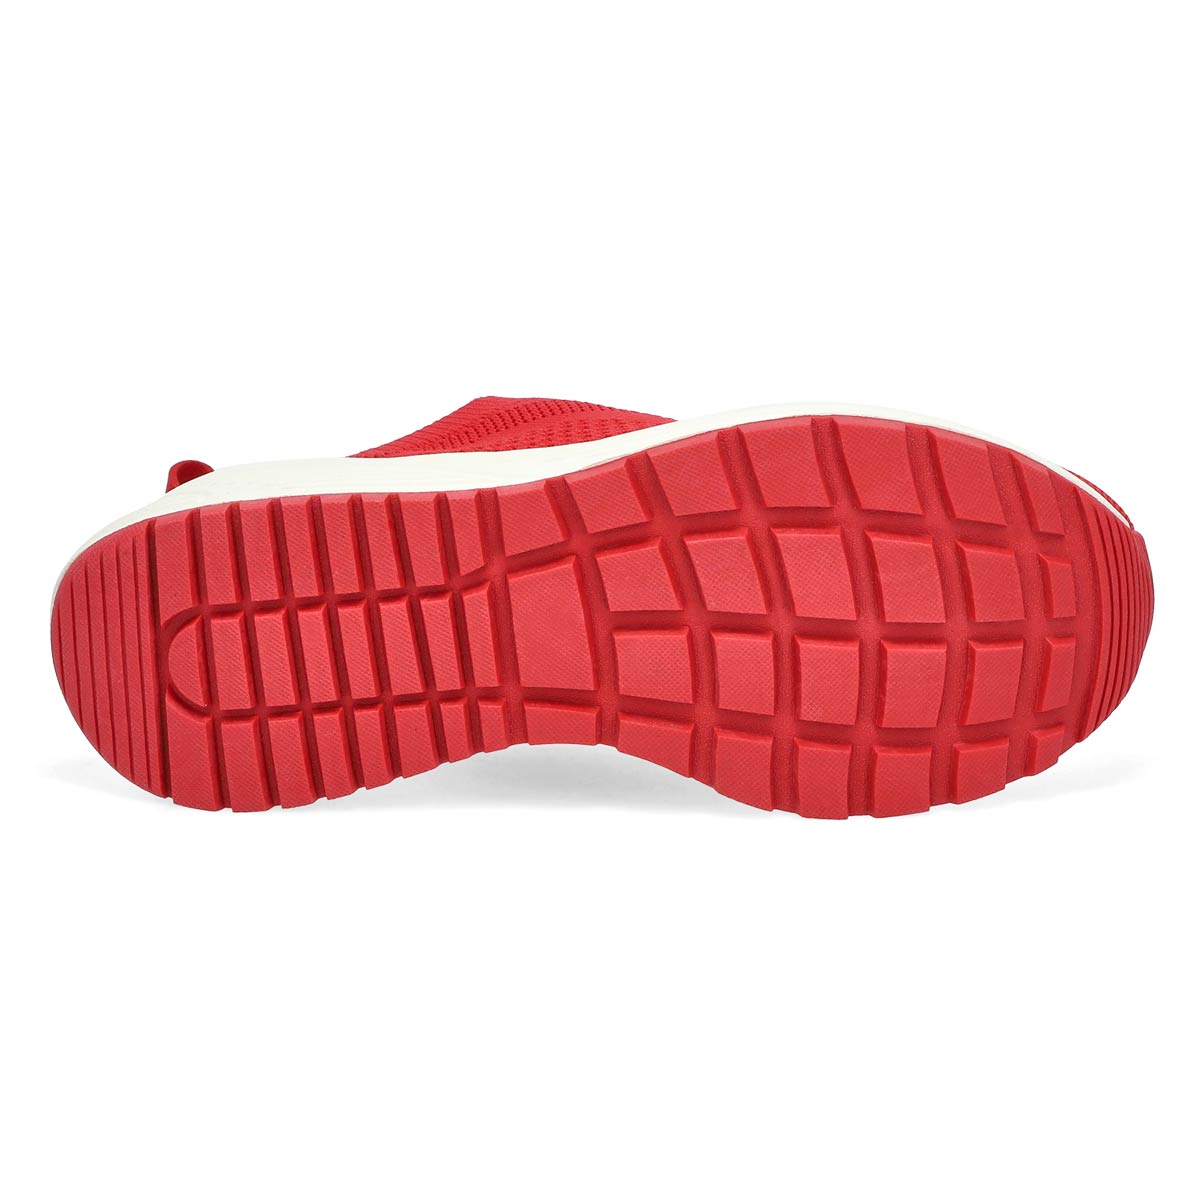 Women's Bobs Sparrow 2.0 Sneaker - Red